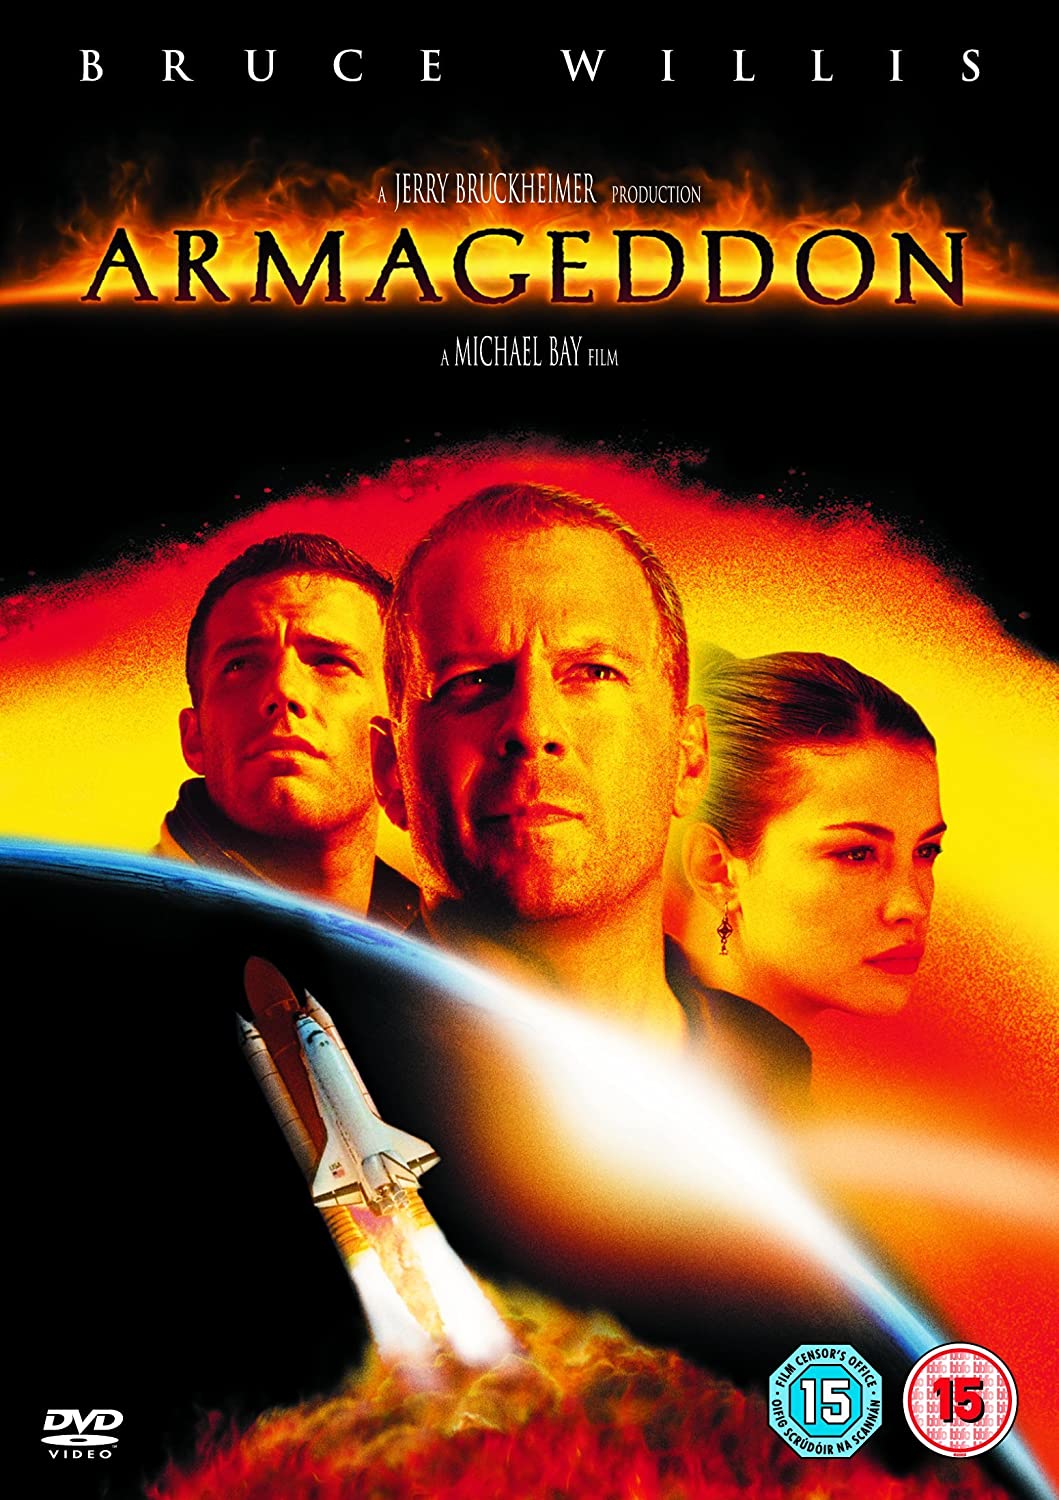 Armageddon – Action/Science-Fiction [DVD]